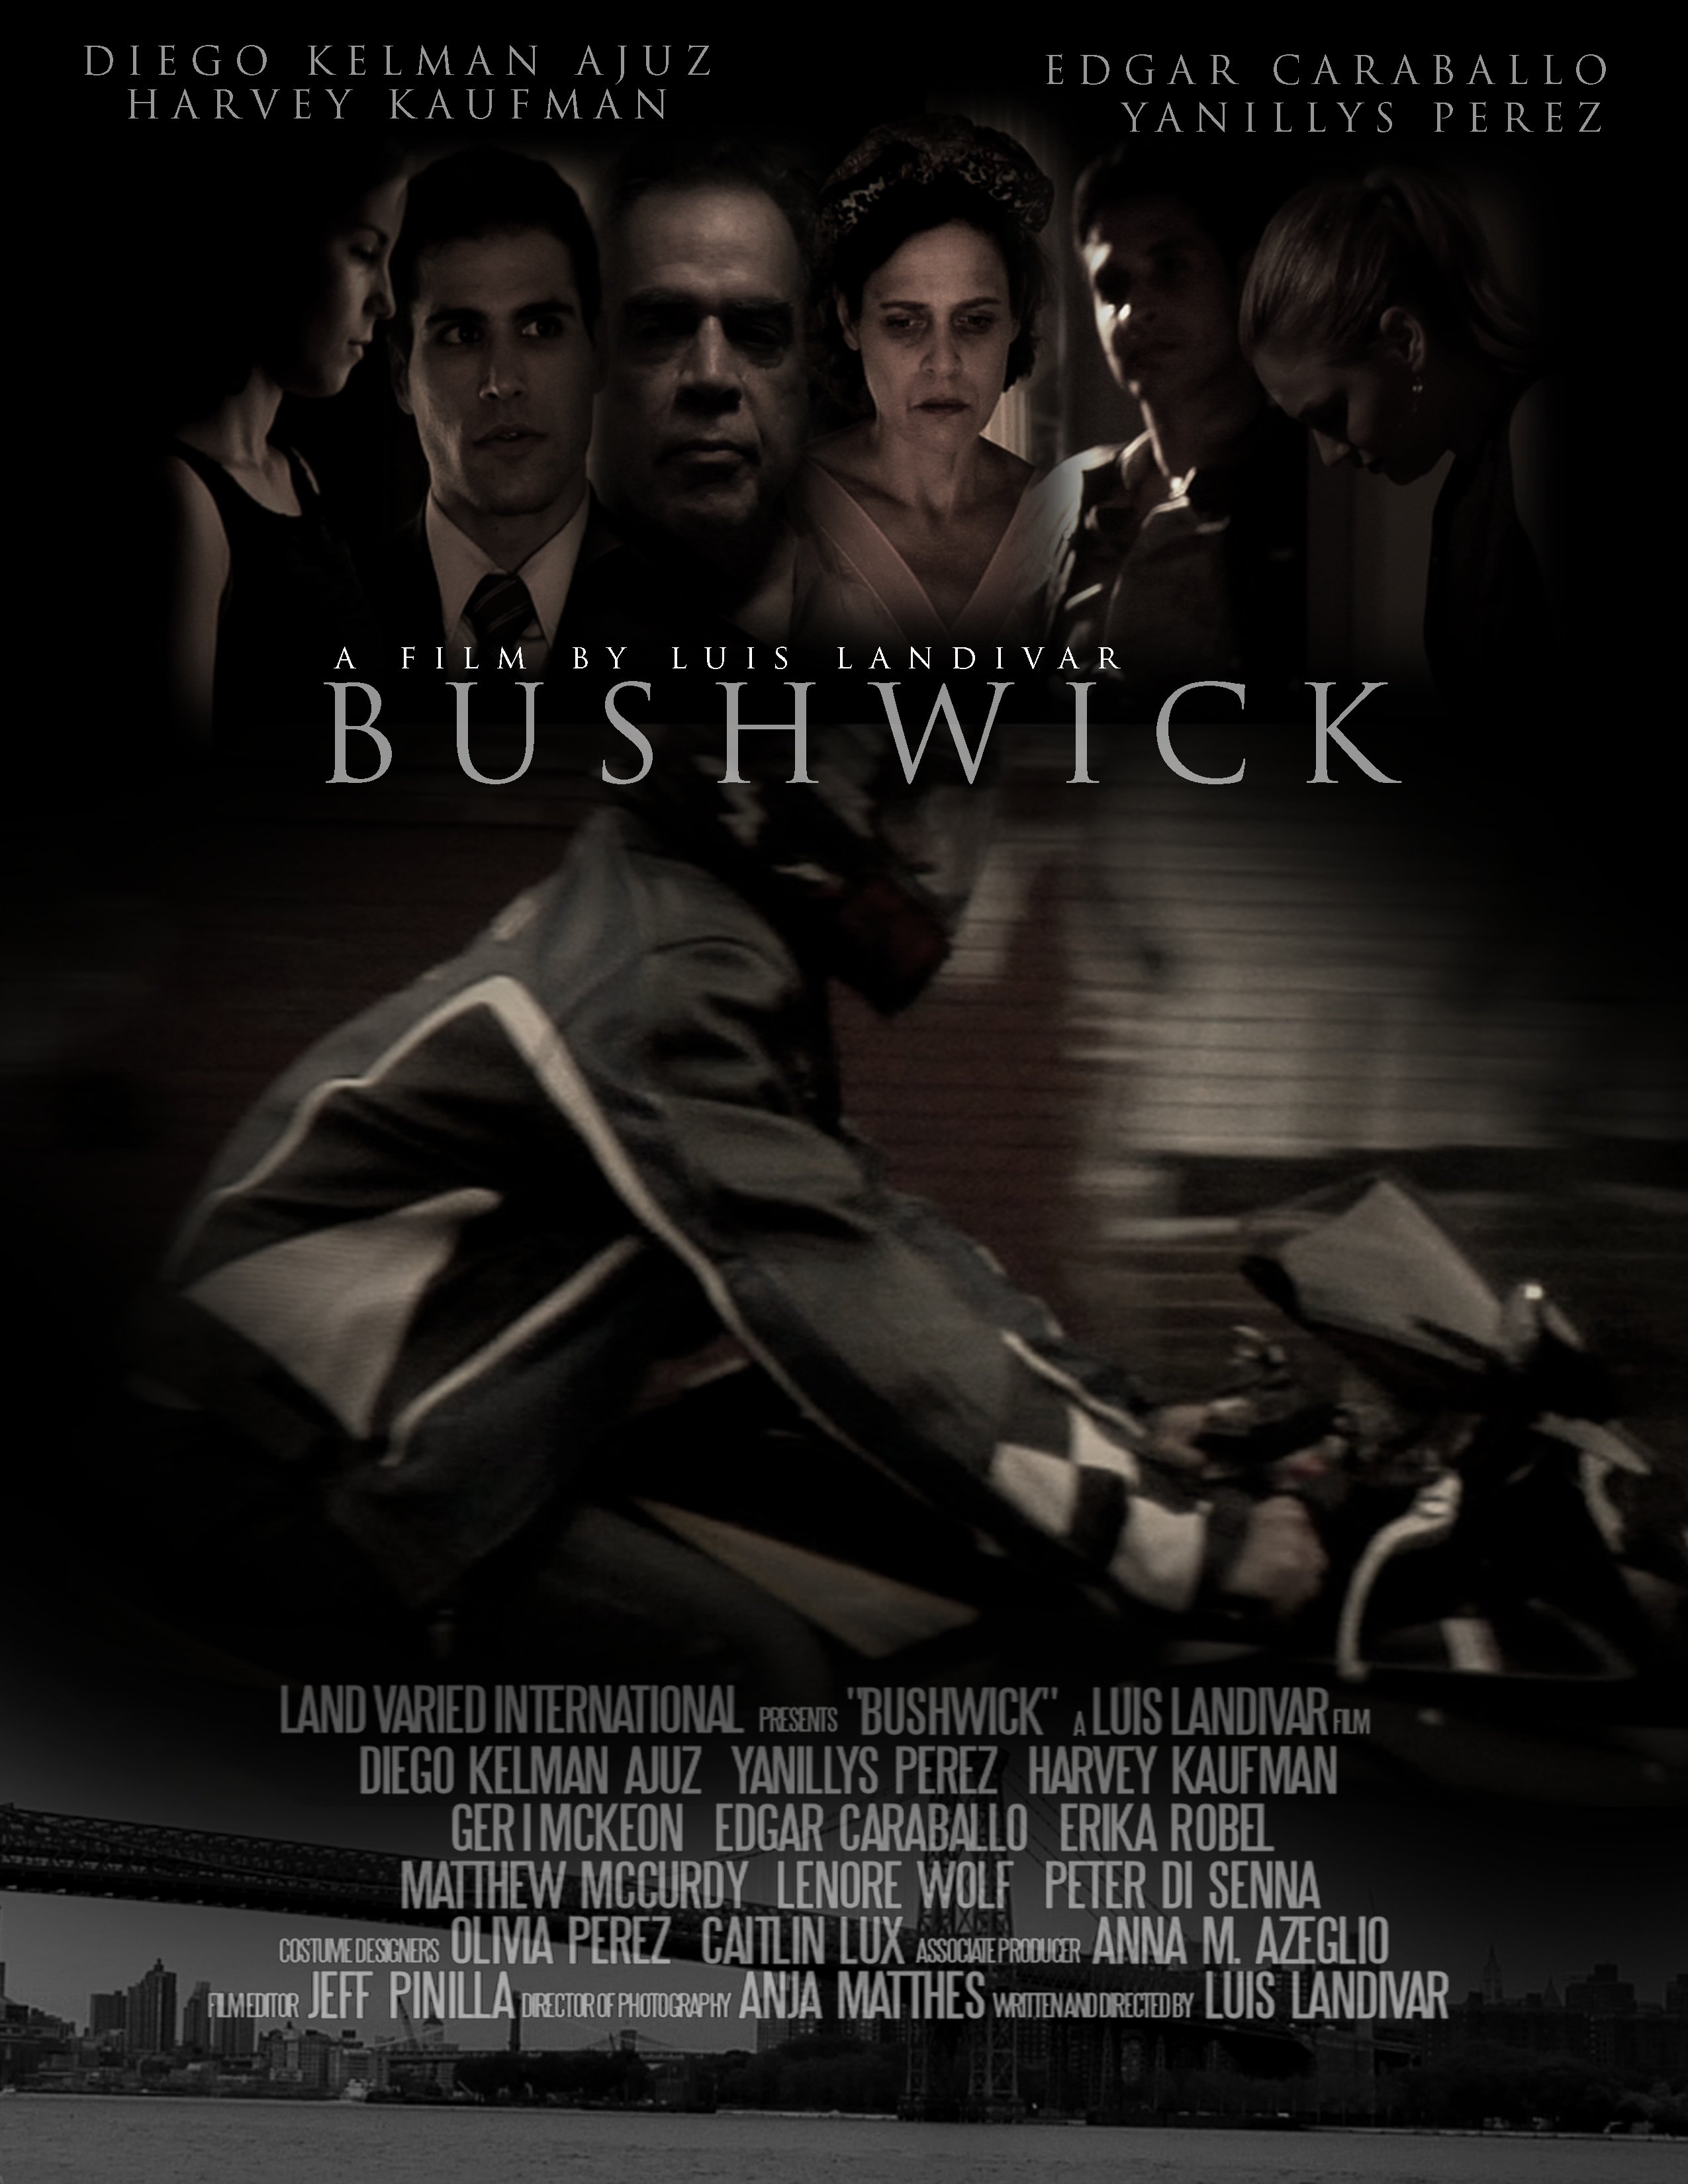 Bushwick (2010)